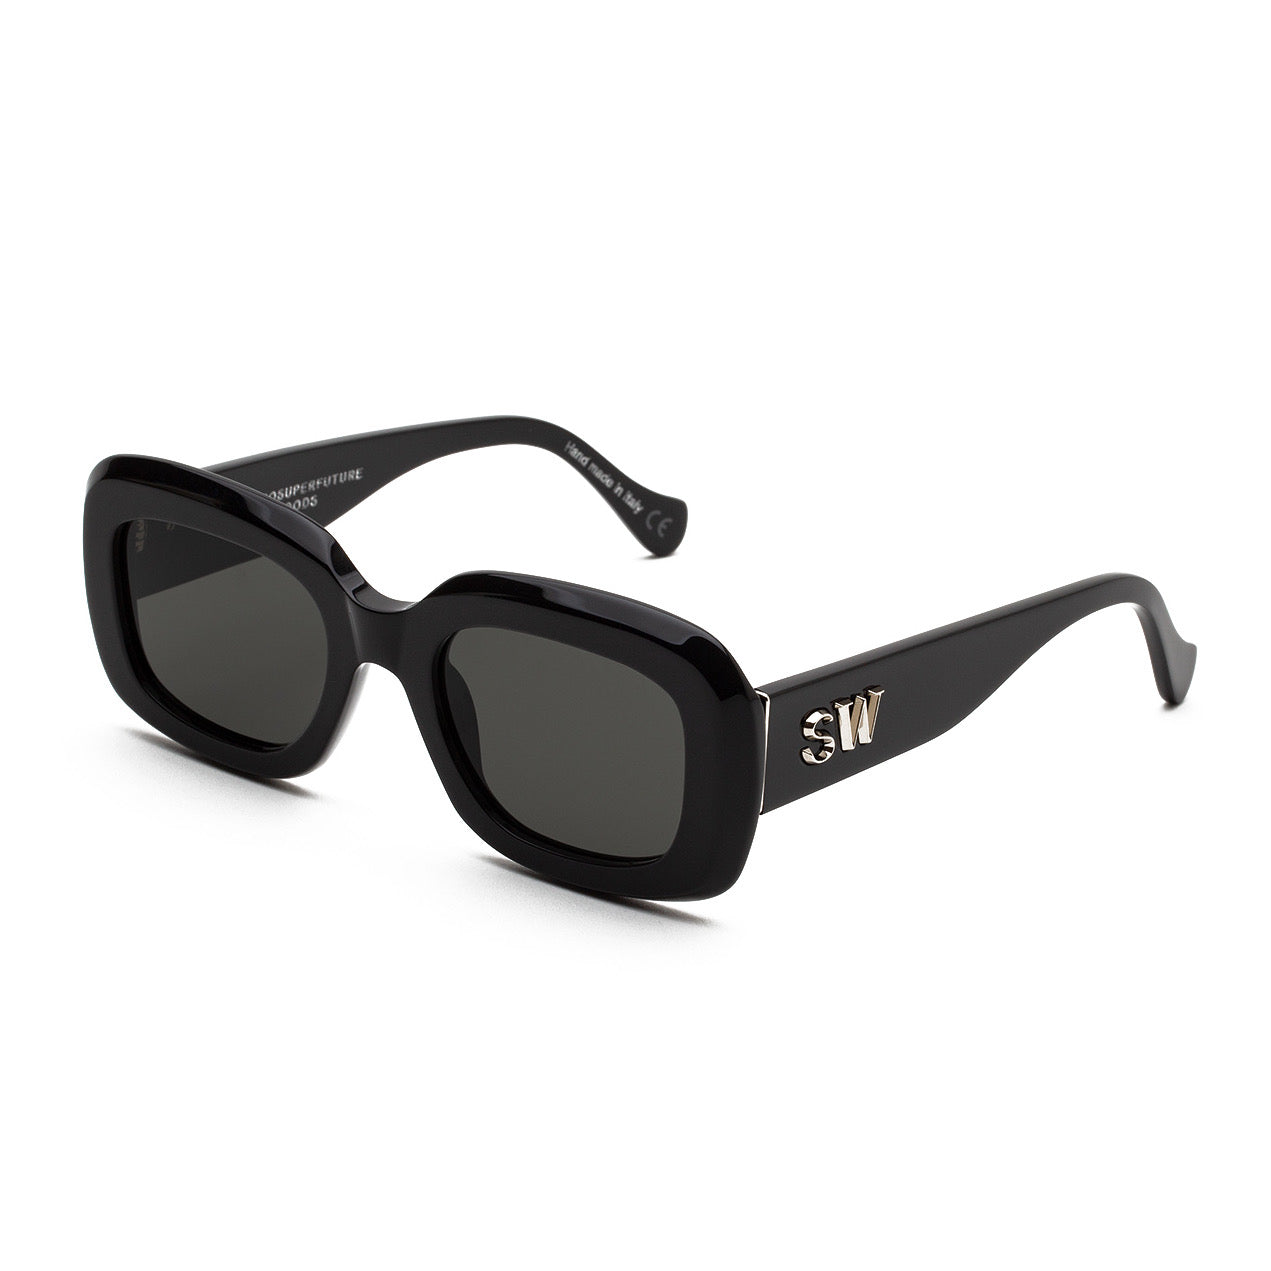 SW X RSF Black Sunglasses